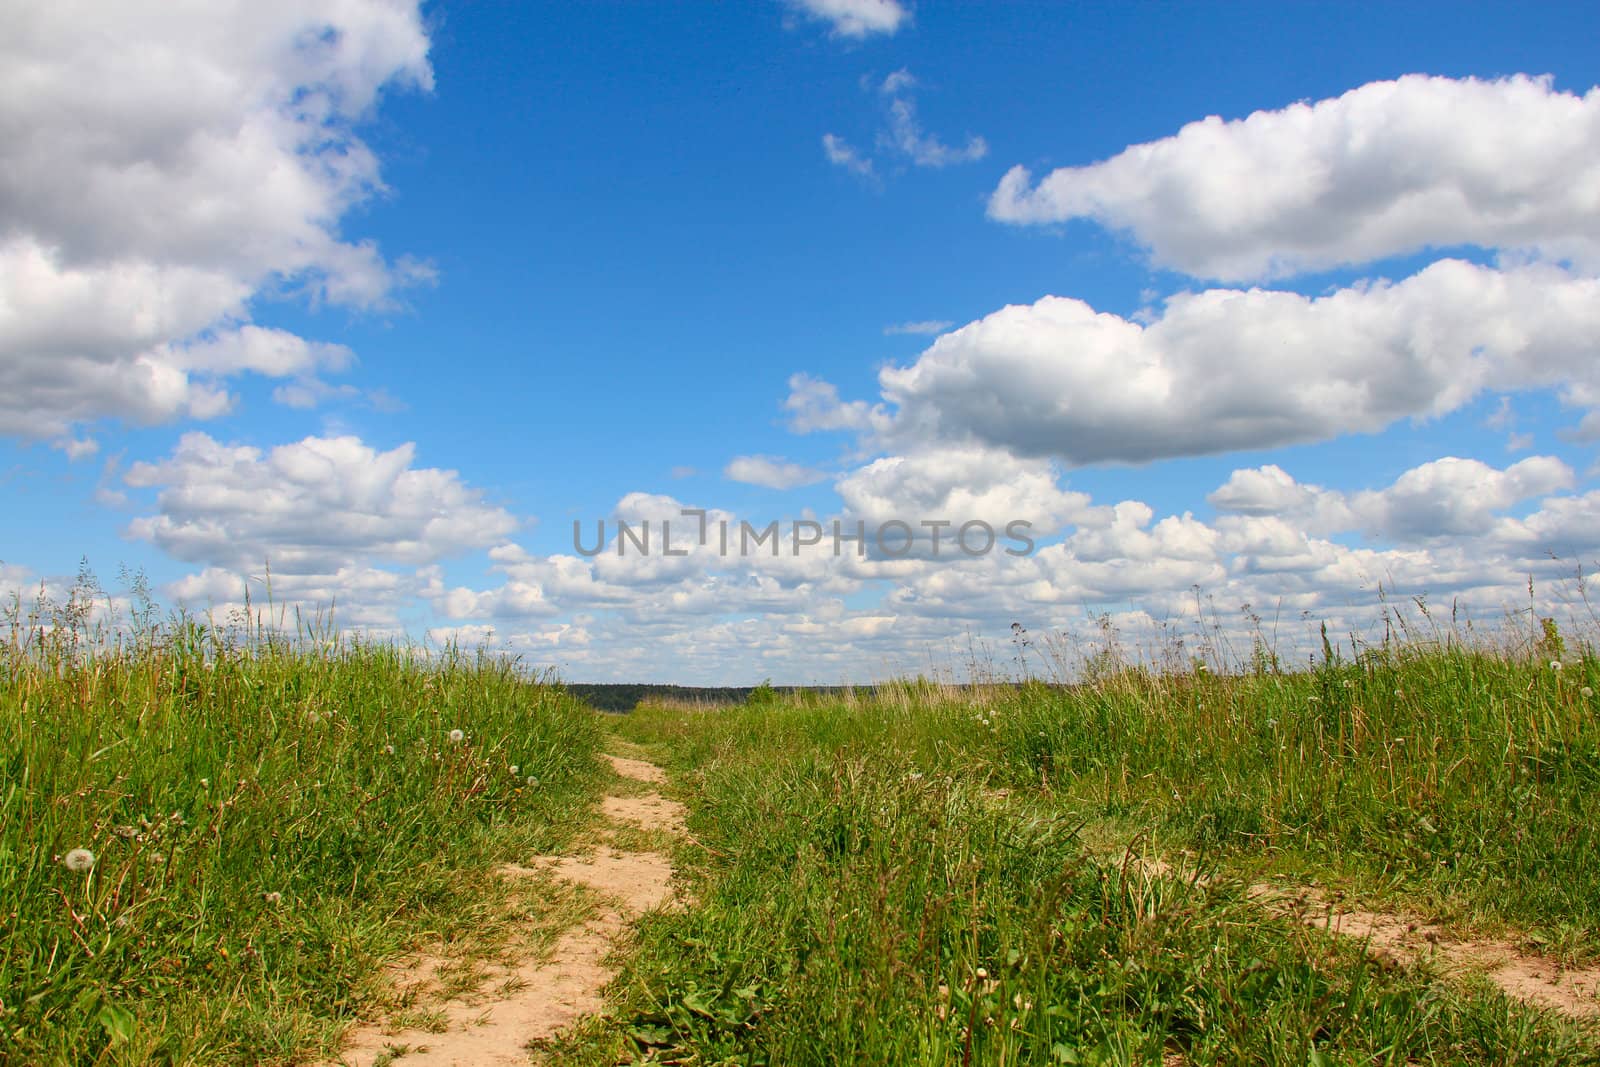 Road in grass field under cloudy blue sky